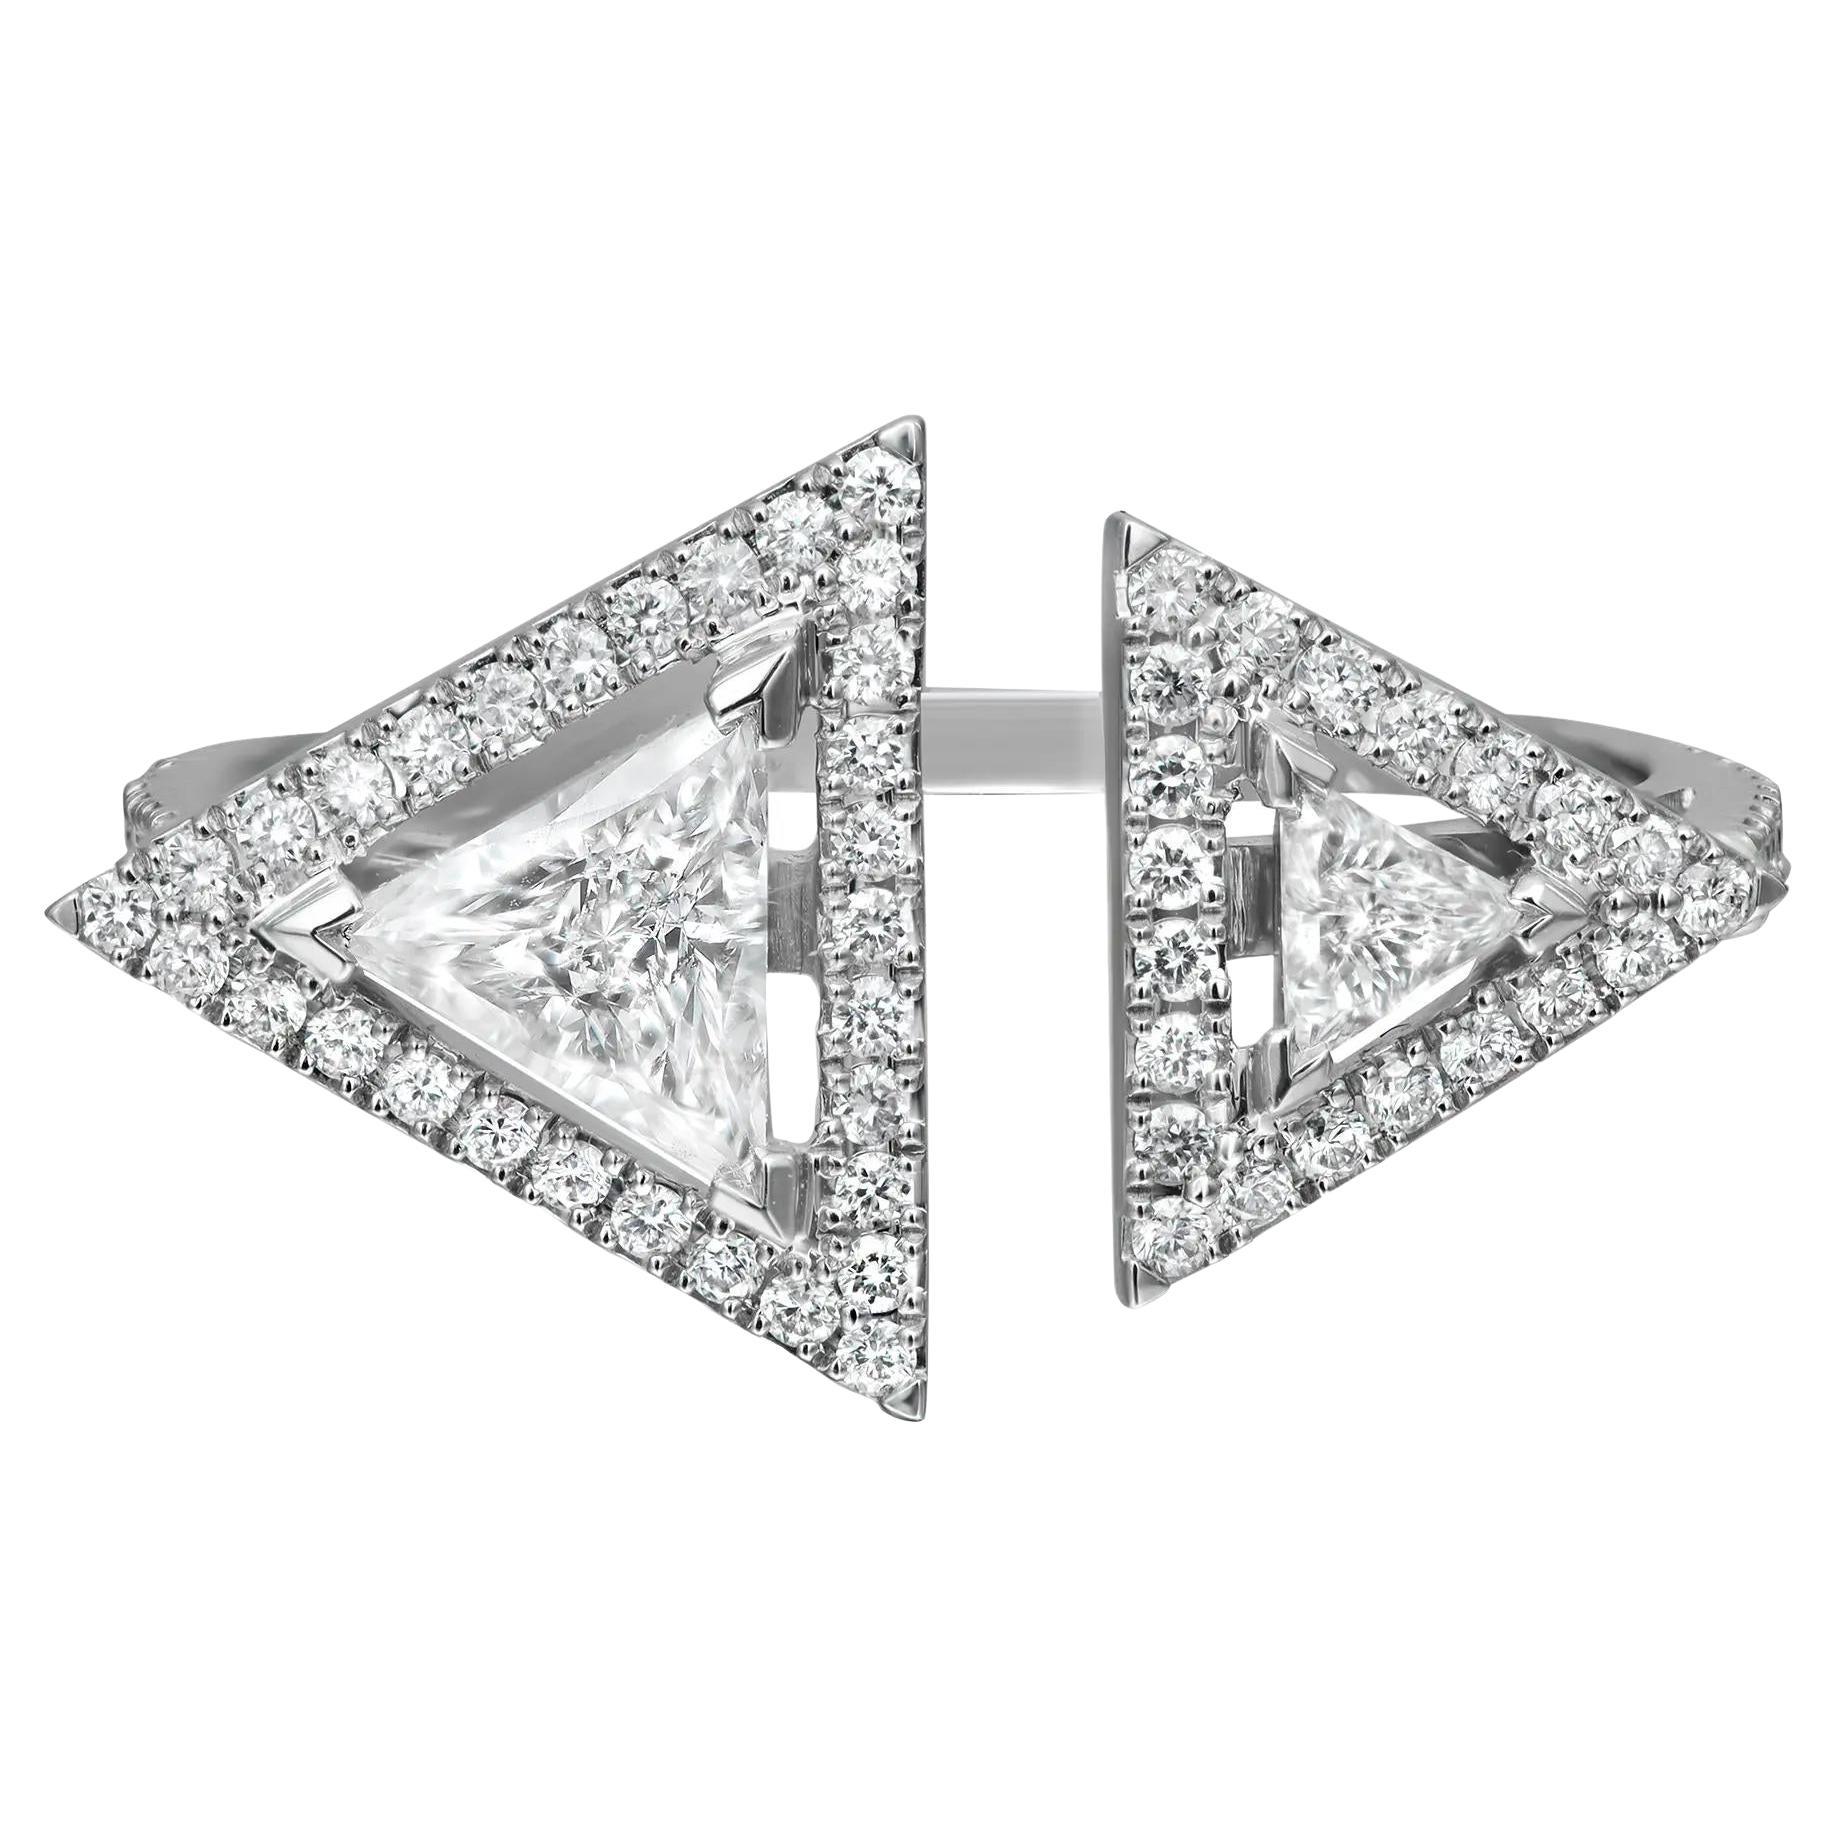 Messika Bague Thea Toi & Moi en or blanc 18 carats avec diamants 0,65 carat, taille 52 US 6